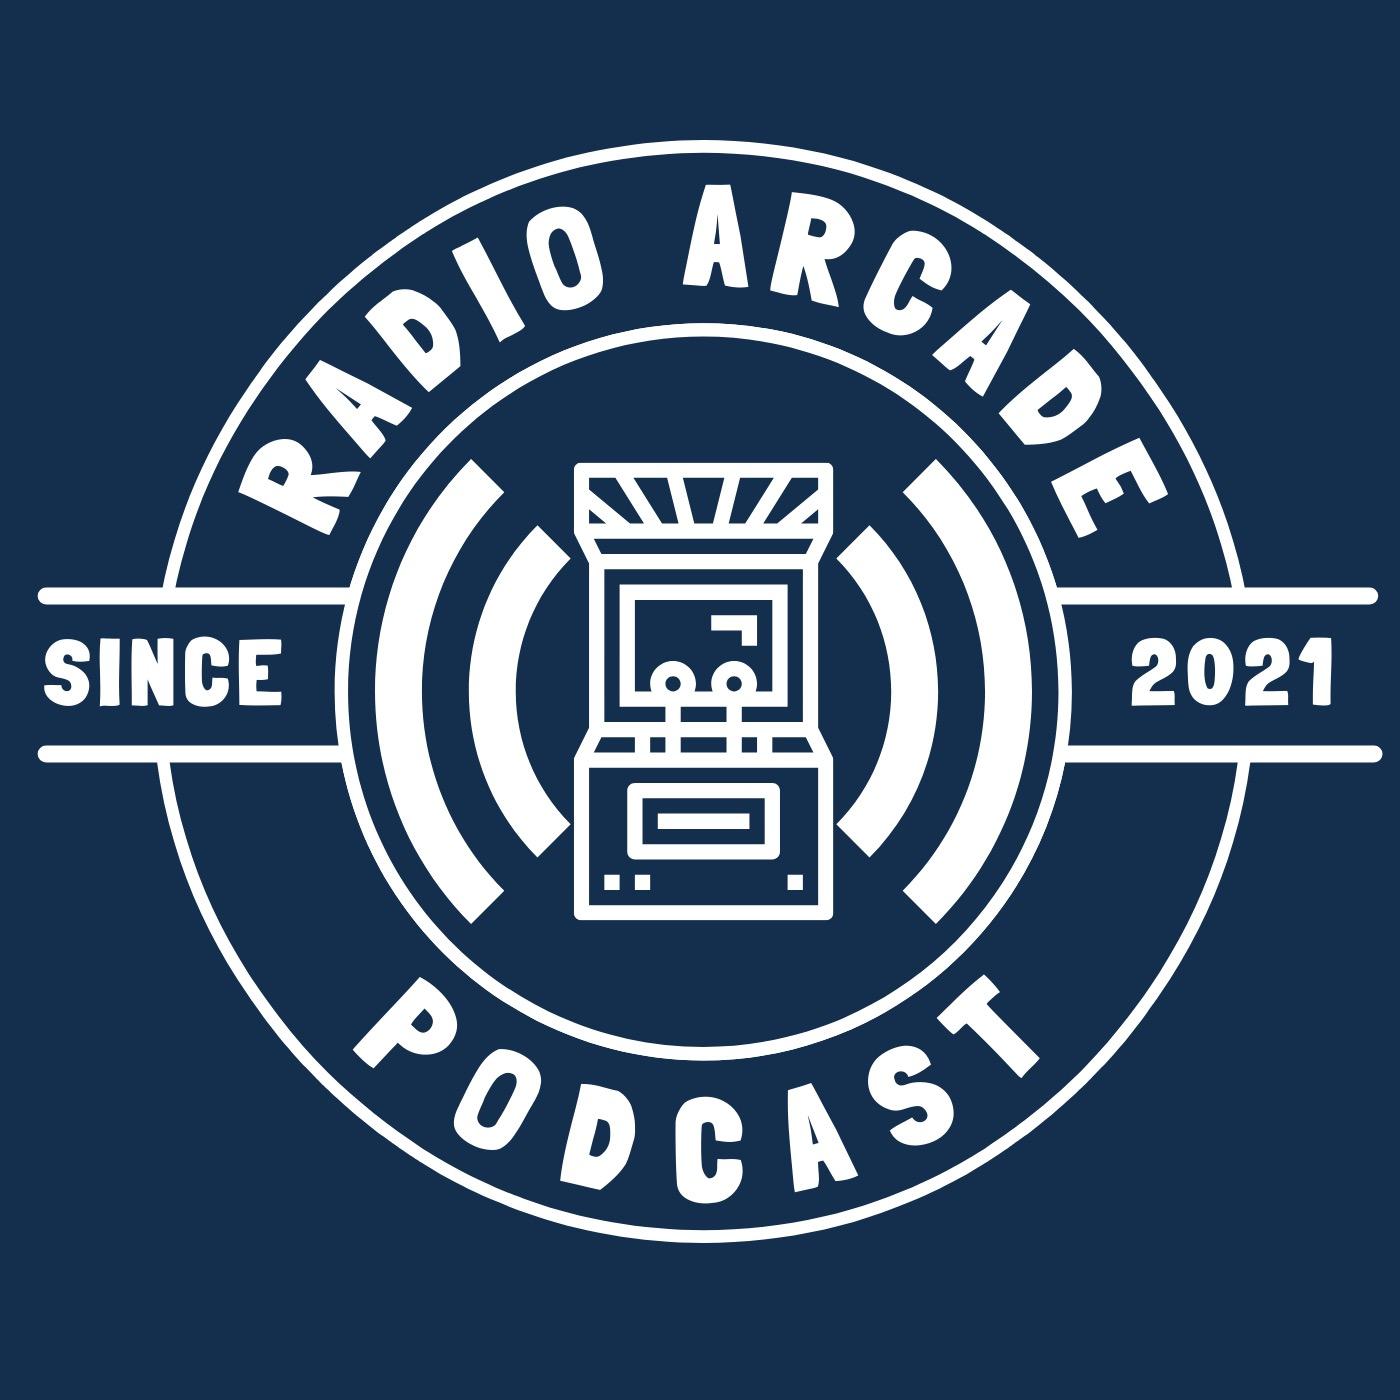 The Radio Arcade Podcast